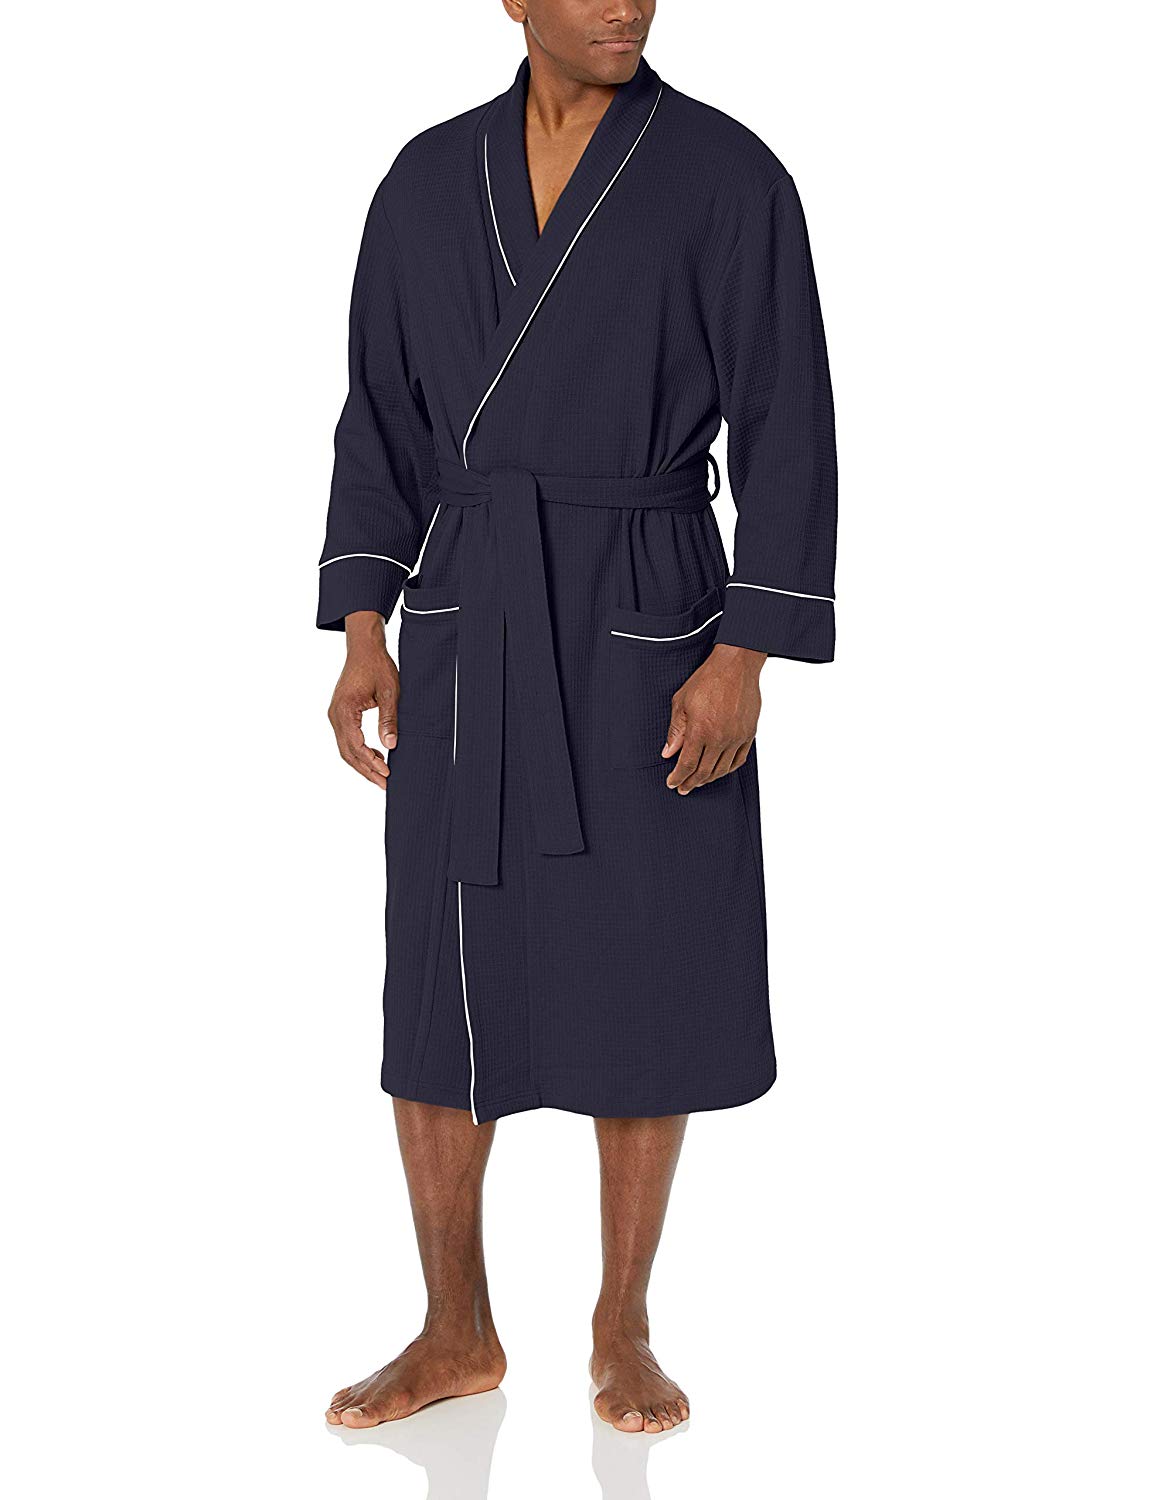 Essentials Men's Waffle Shawl Robe Sleepwear,, Navy, Size Medium/Large ...